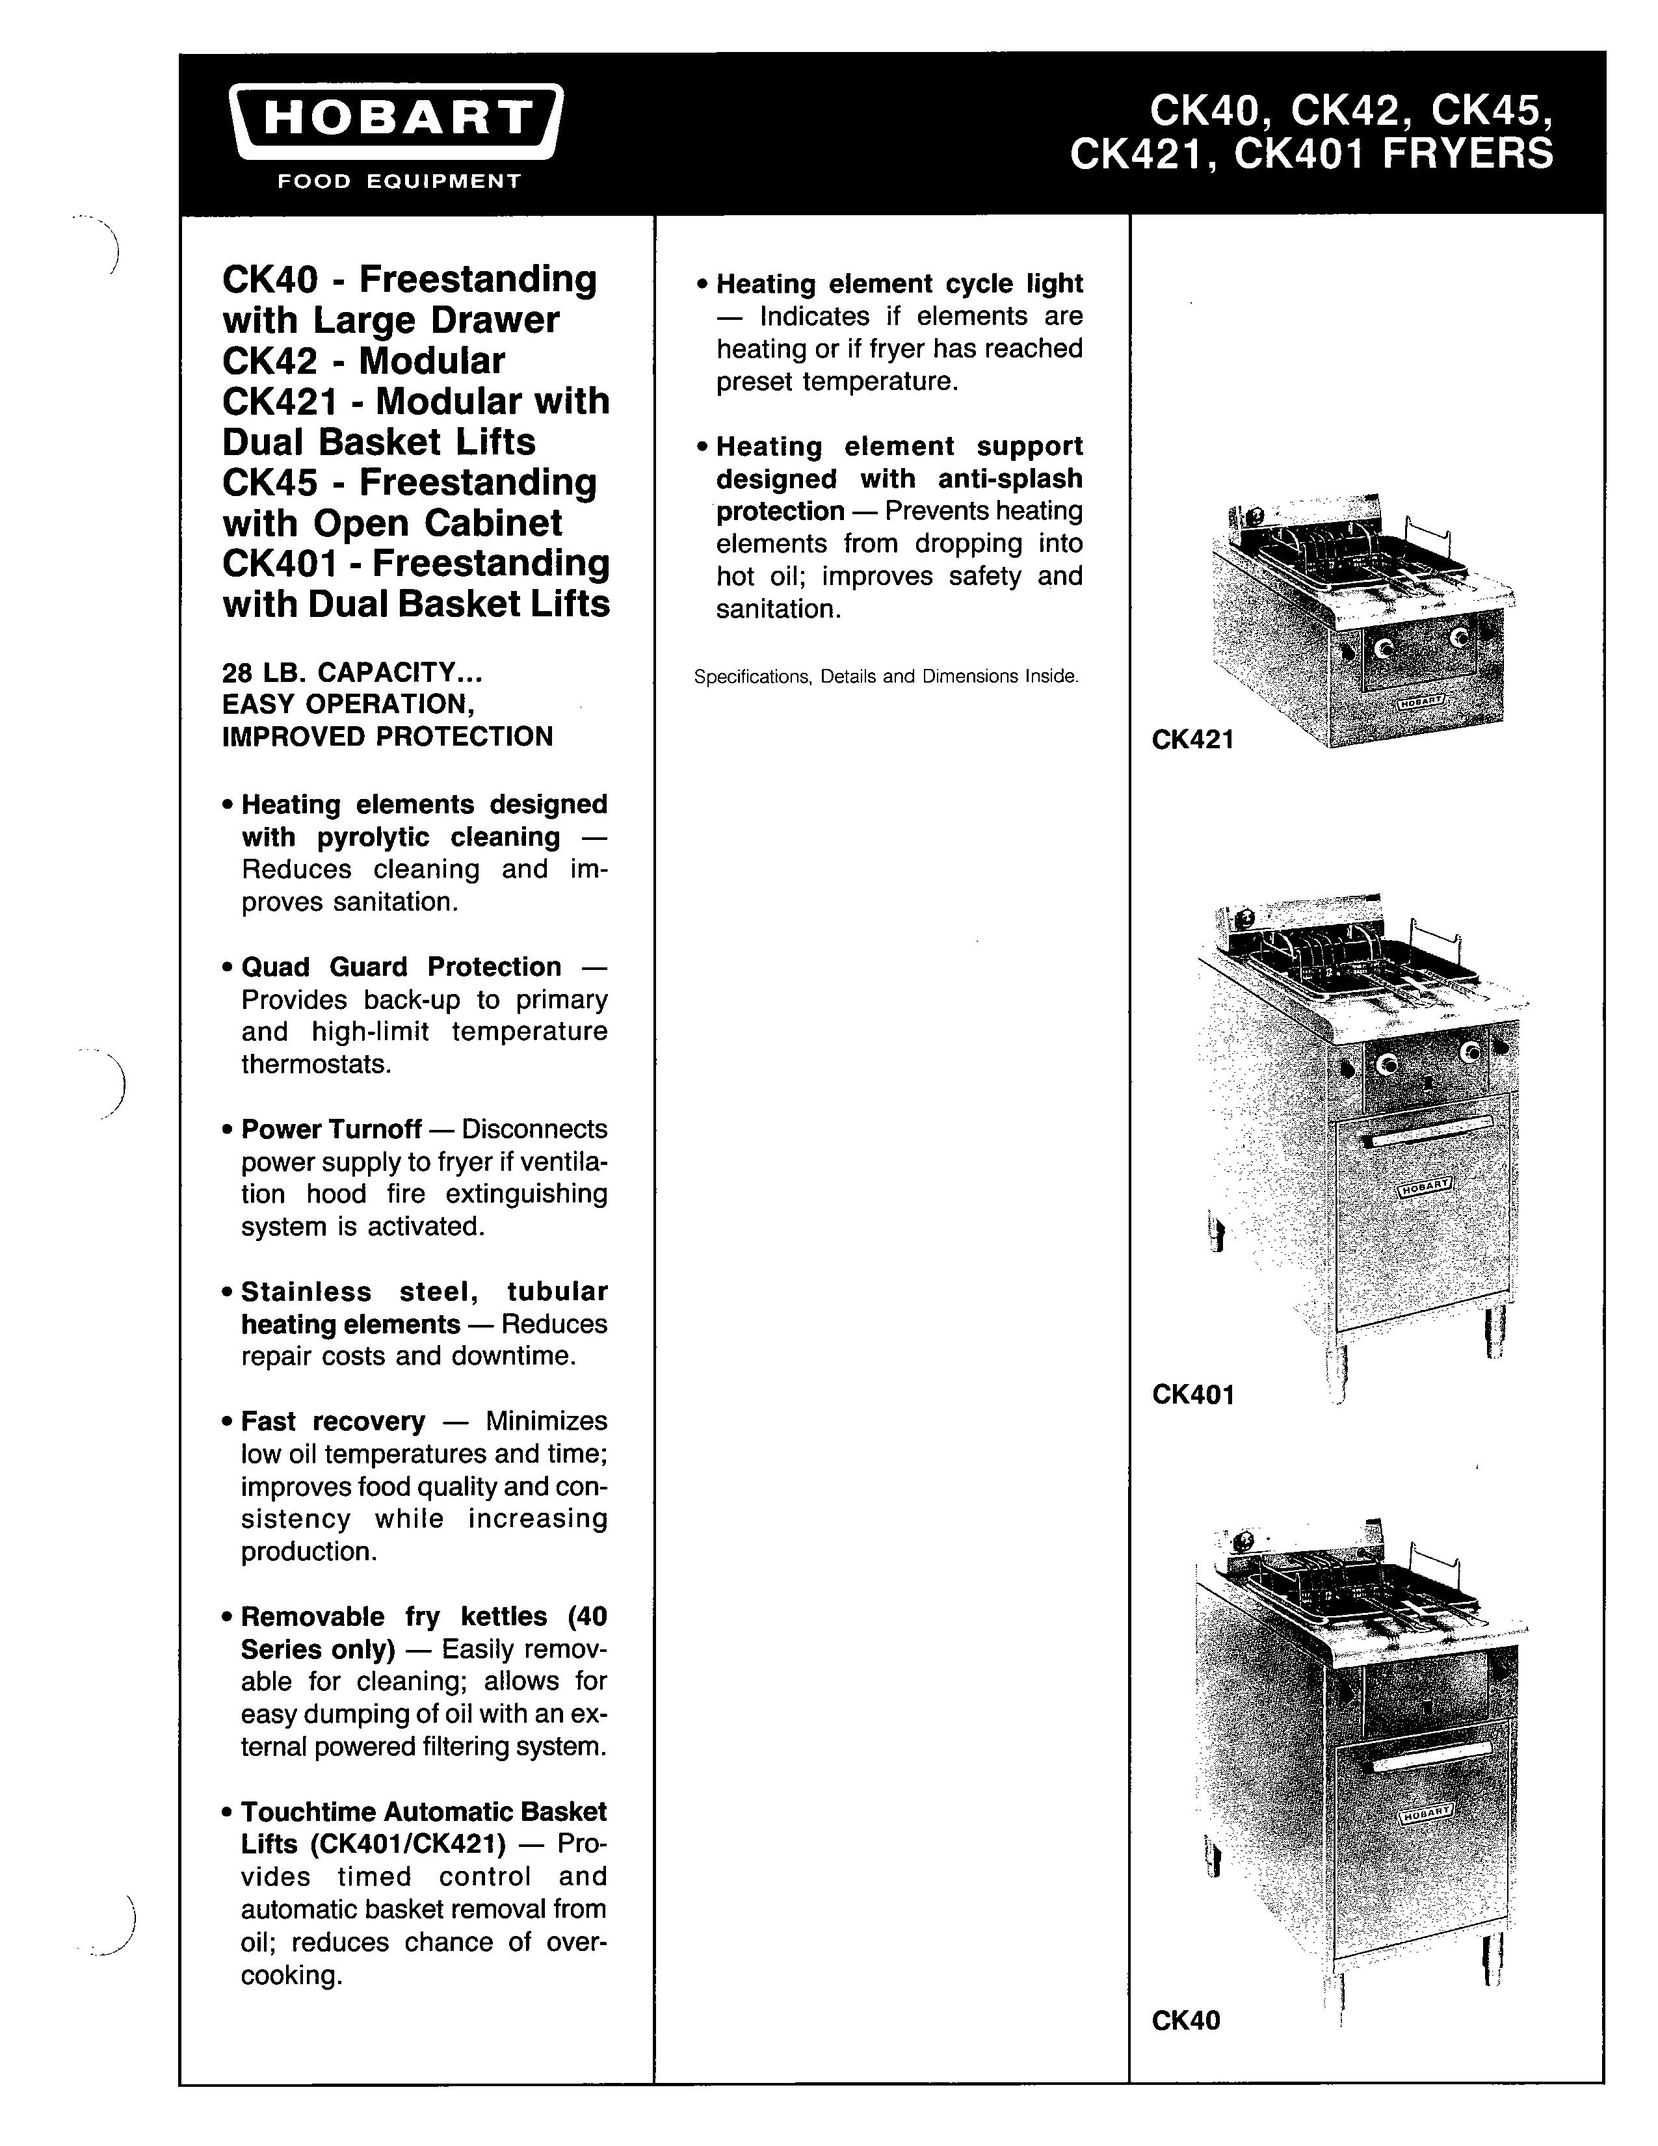 Hobart CK421 Fryer User Manual